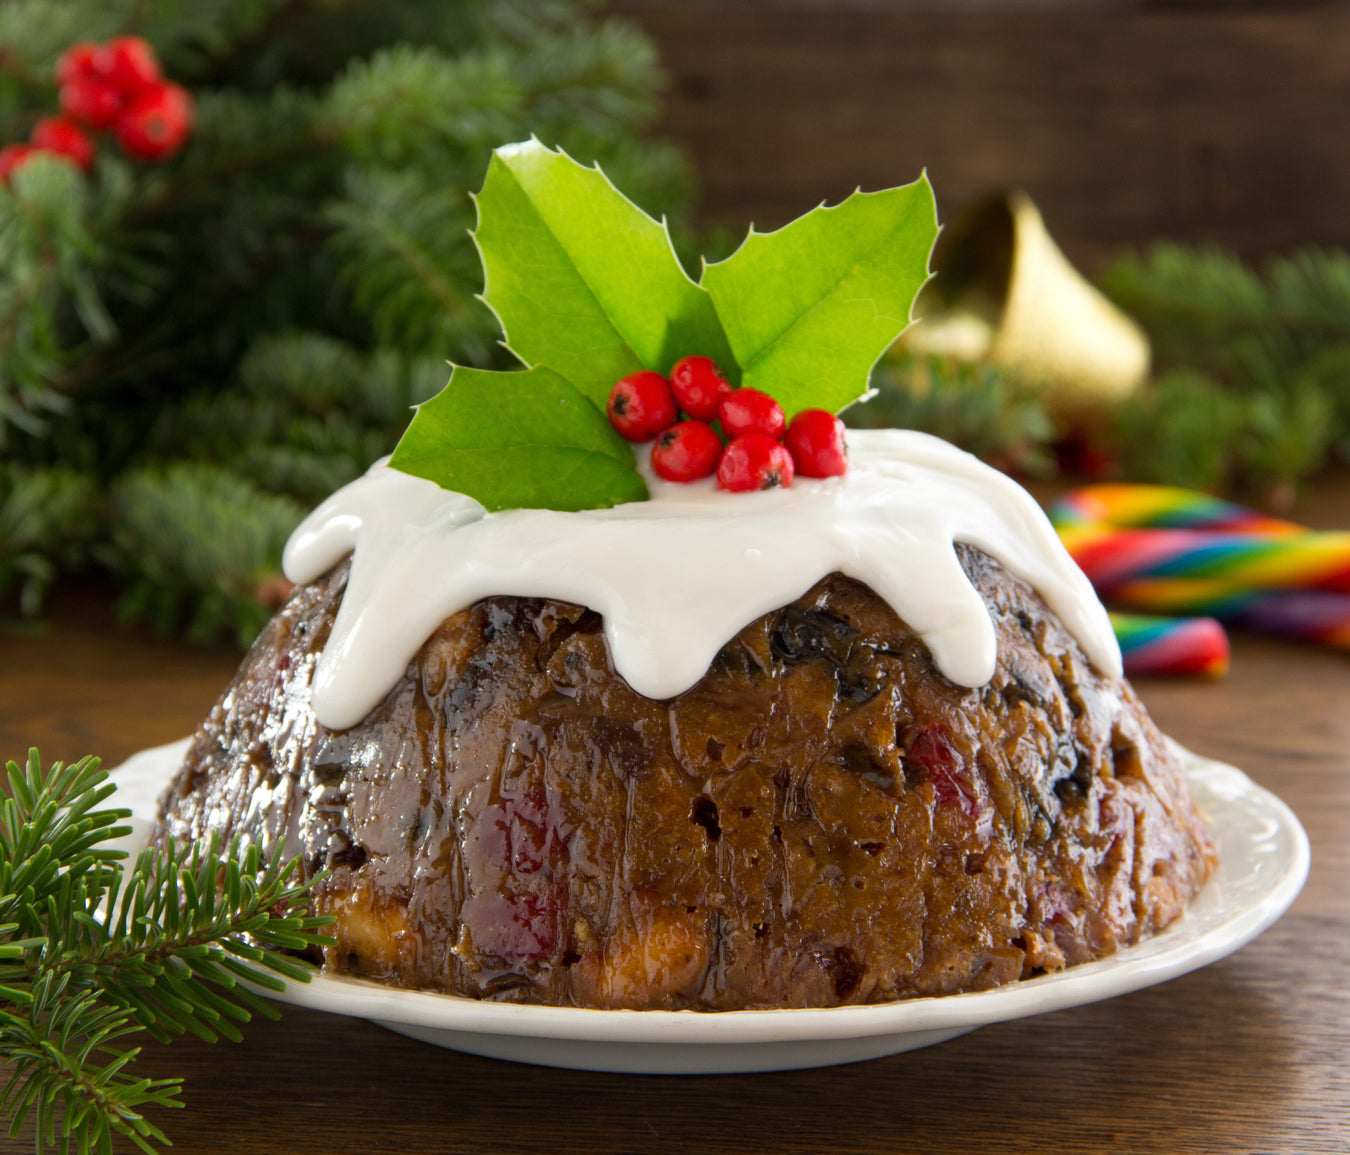 Chef Jessica's Nana's Holiday Pudding Recipe